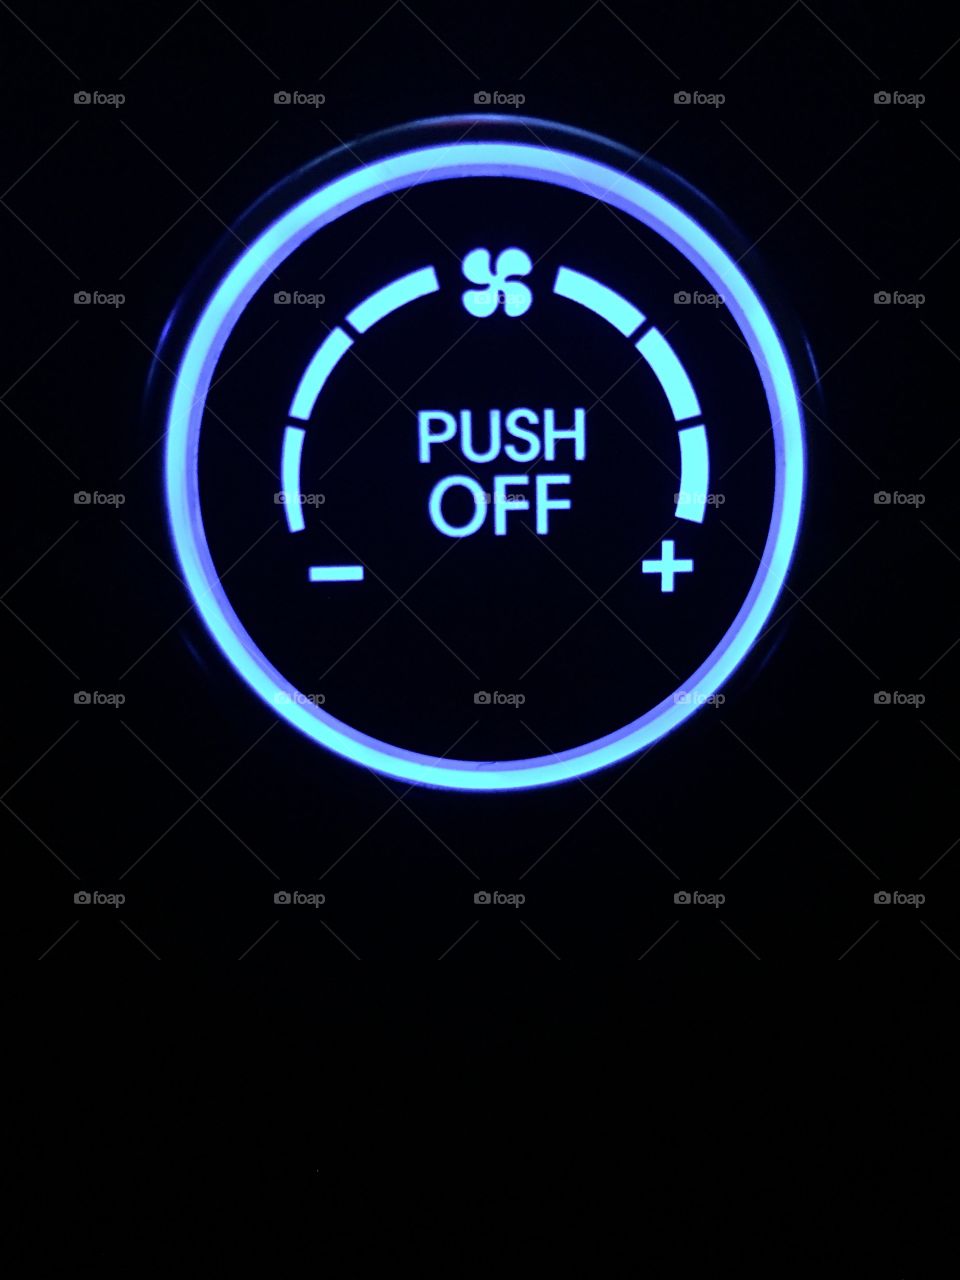 Push it !!